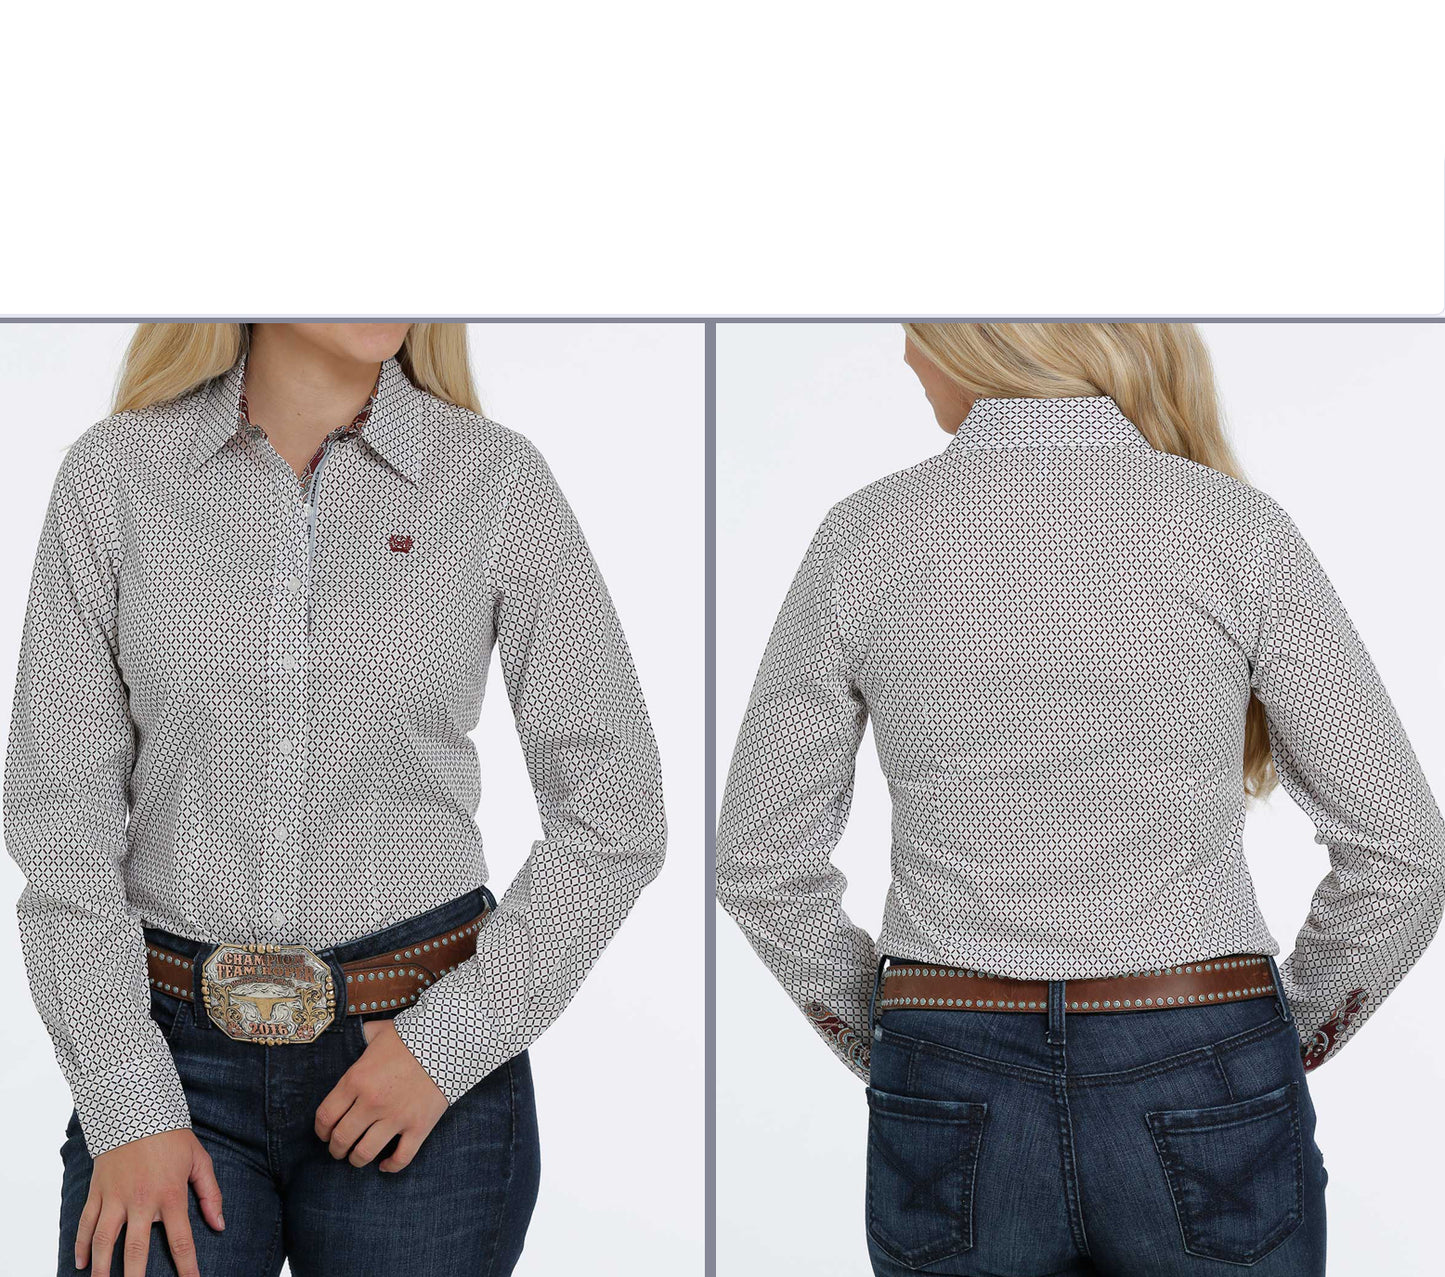 Women’’s Long Sleeve Cinch Shirt MSW9165010